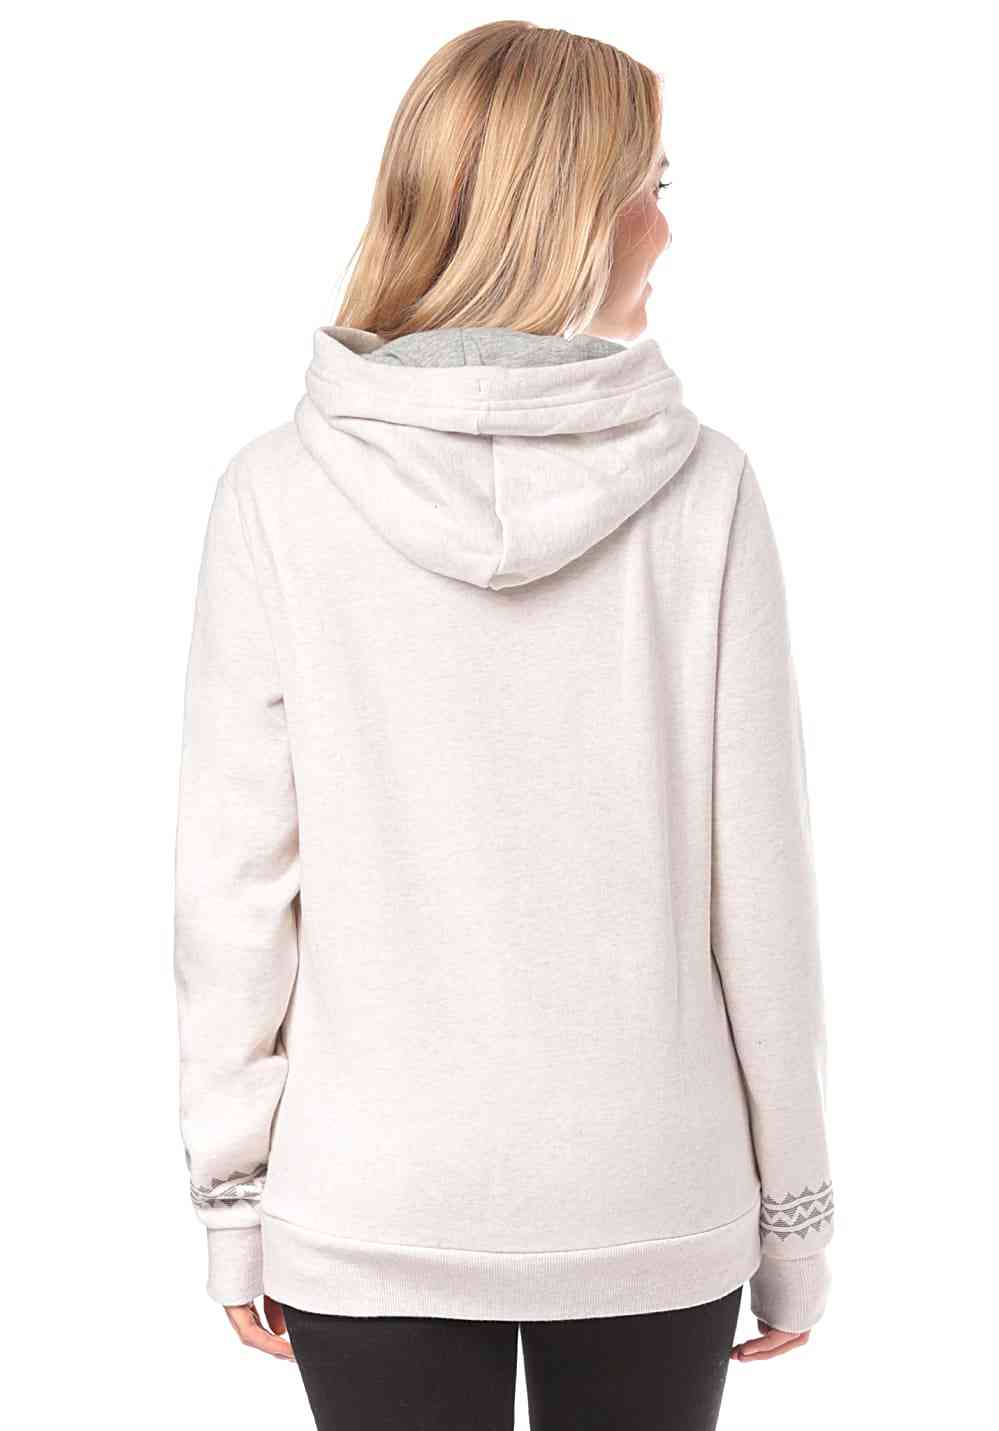 Hooded Fleece With Cross Over Collar, Extra Warmth Sweatshirt